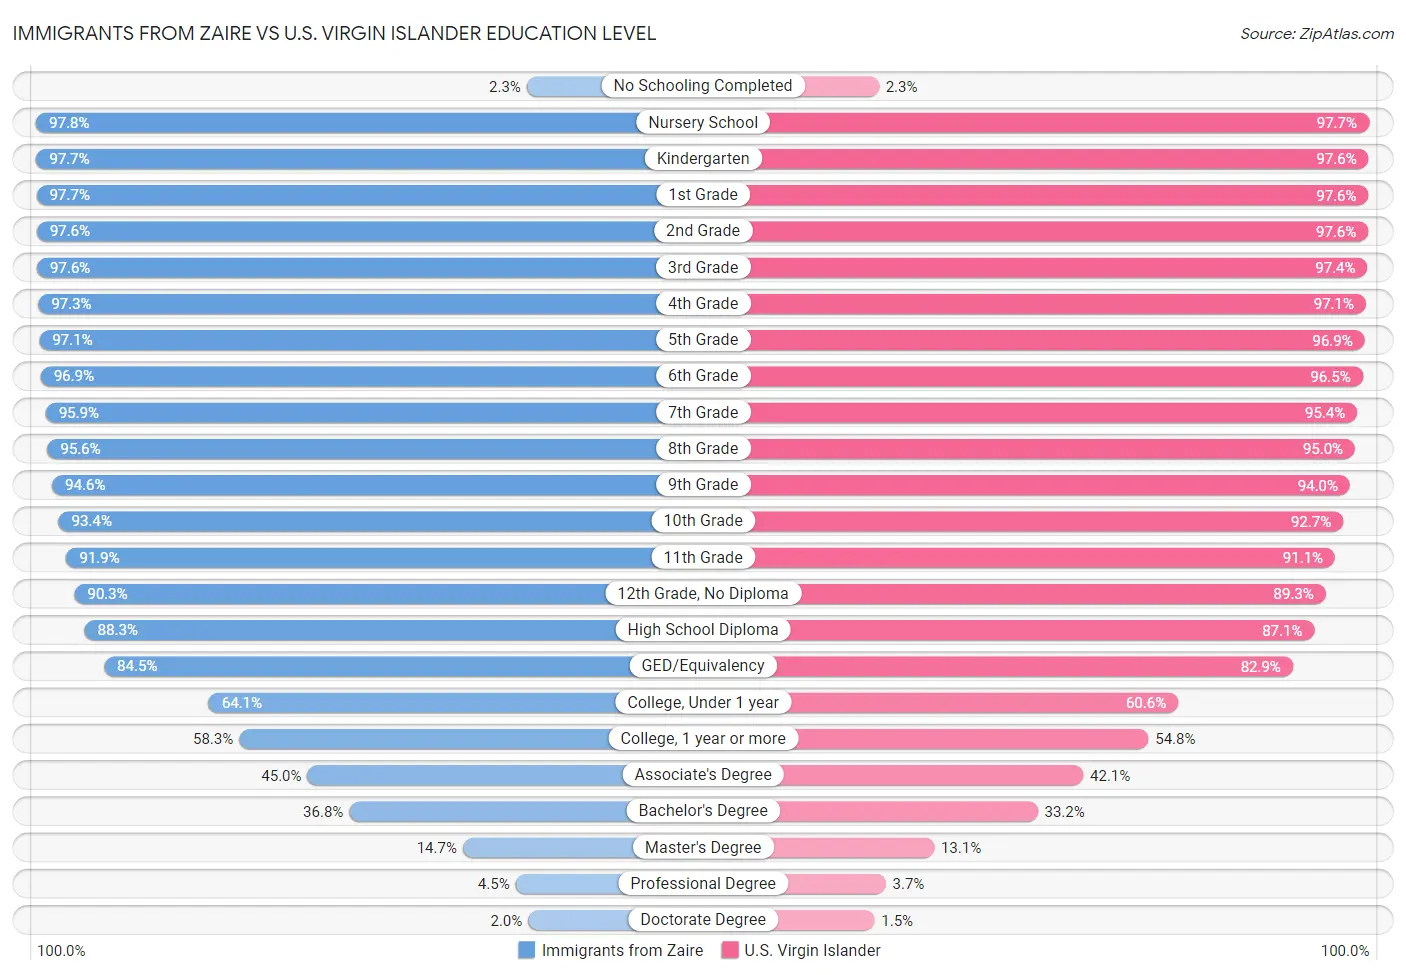 Immigrants from Zaire vs U.S. Virgin Islander Education Level